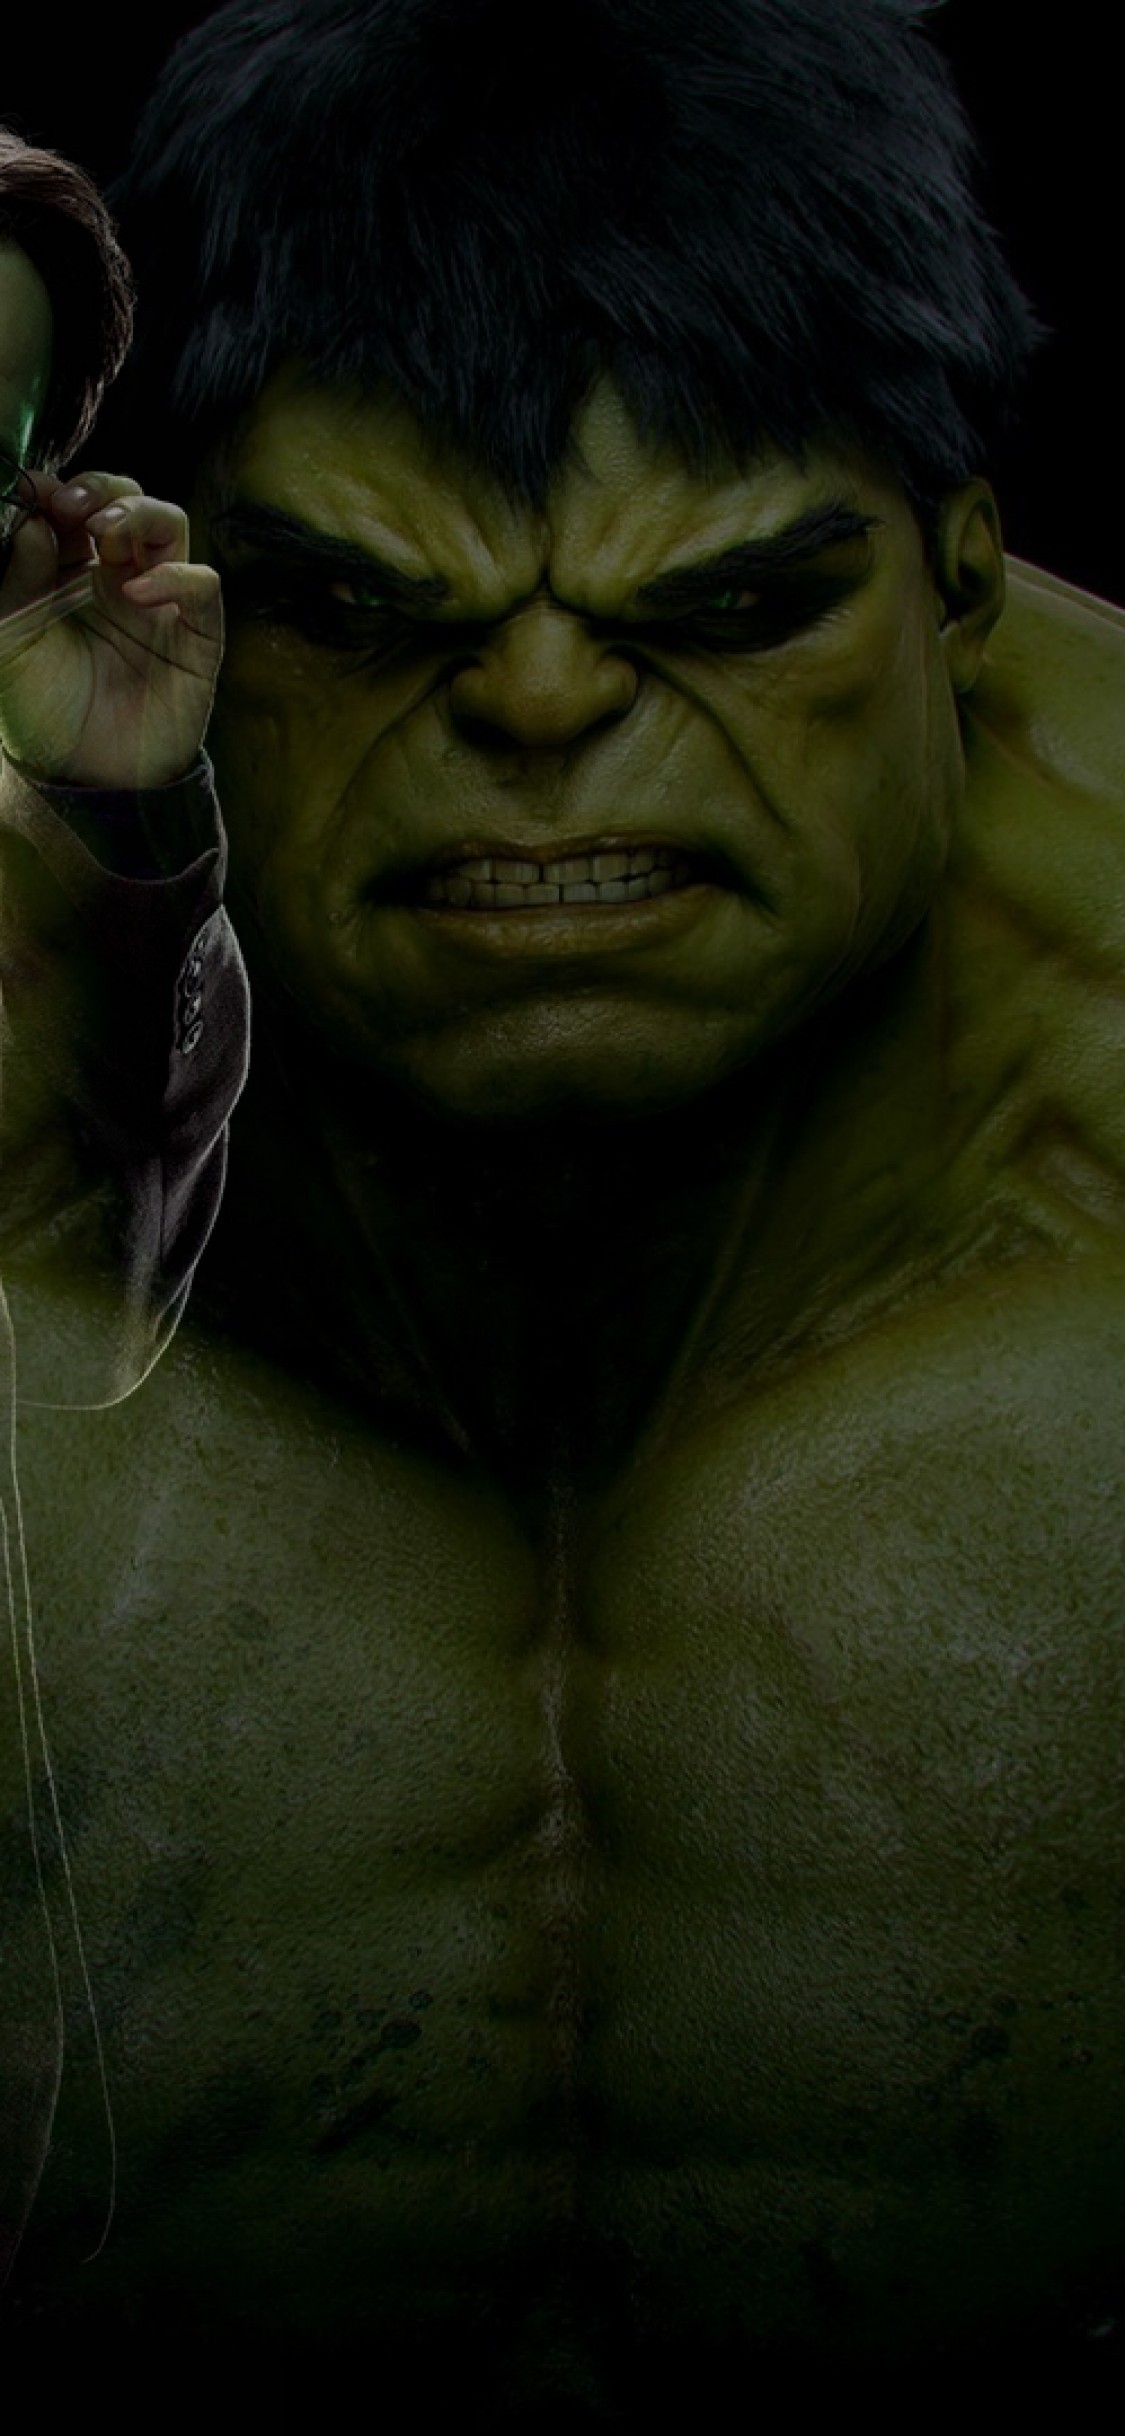 The Avengers, Hulk - Avengers Hulk Wallpaper Hd - HD Wallpaper 